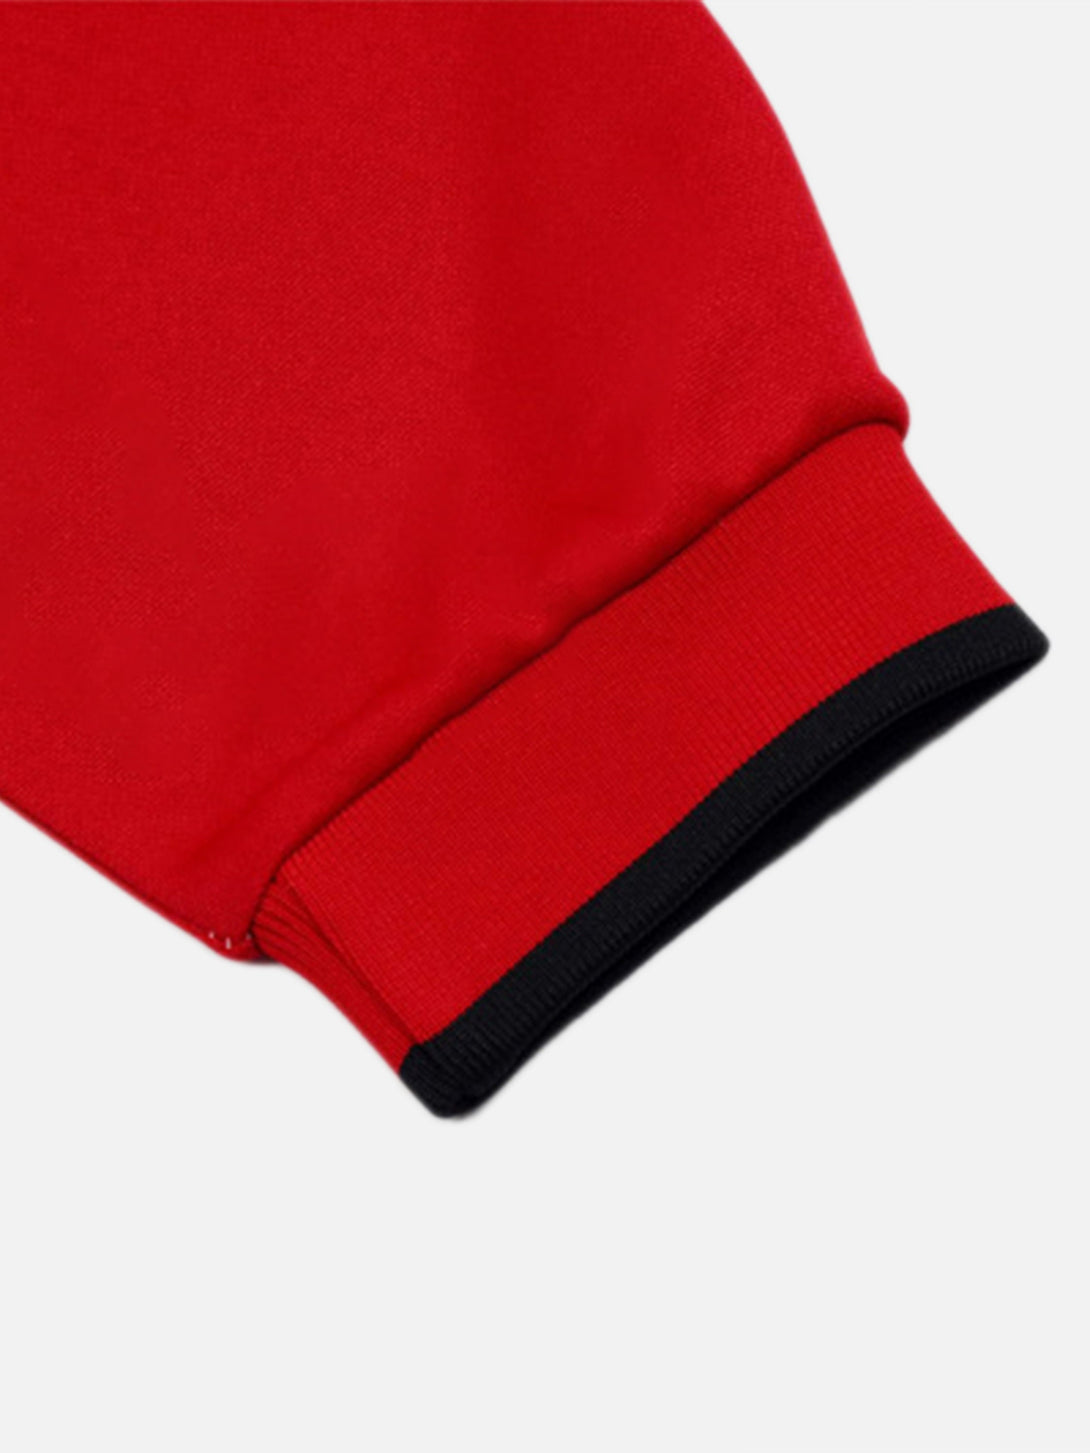 Majesda® - V-neck Digital Fabric Embroidered Long Sleeve Sweatshirt - 1684- Outfit Ideas - Streetwear Fashion - majesda.com